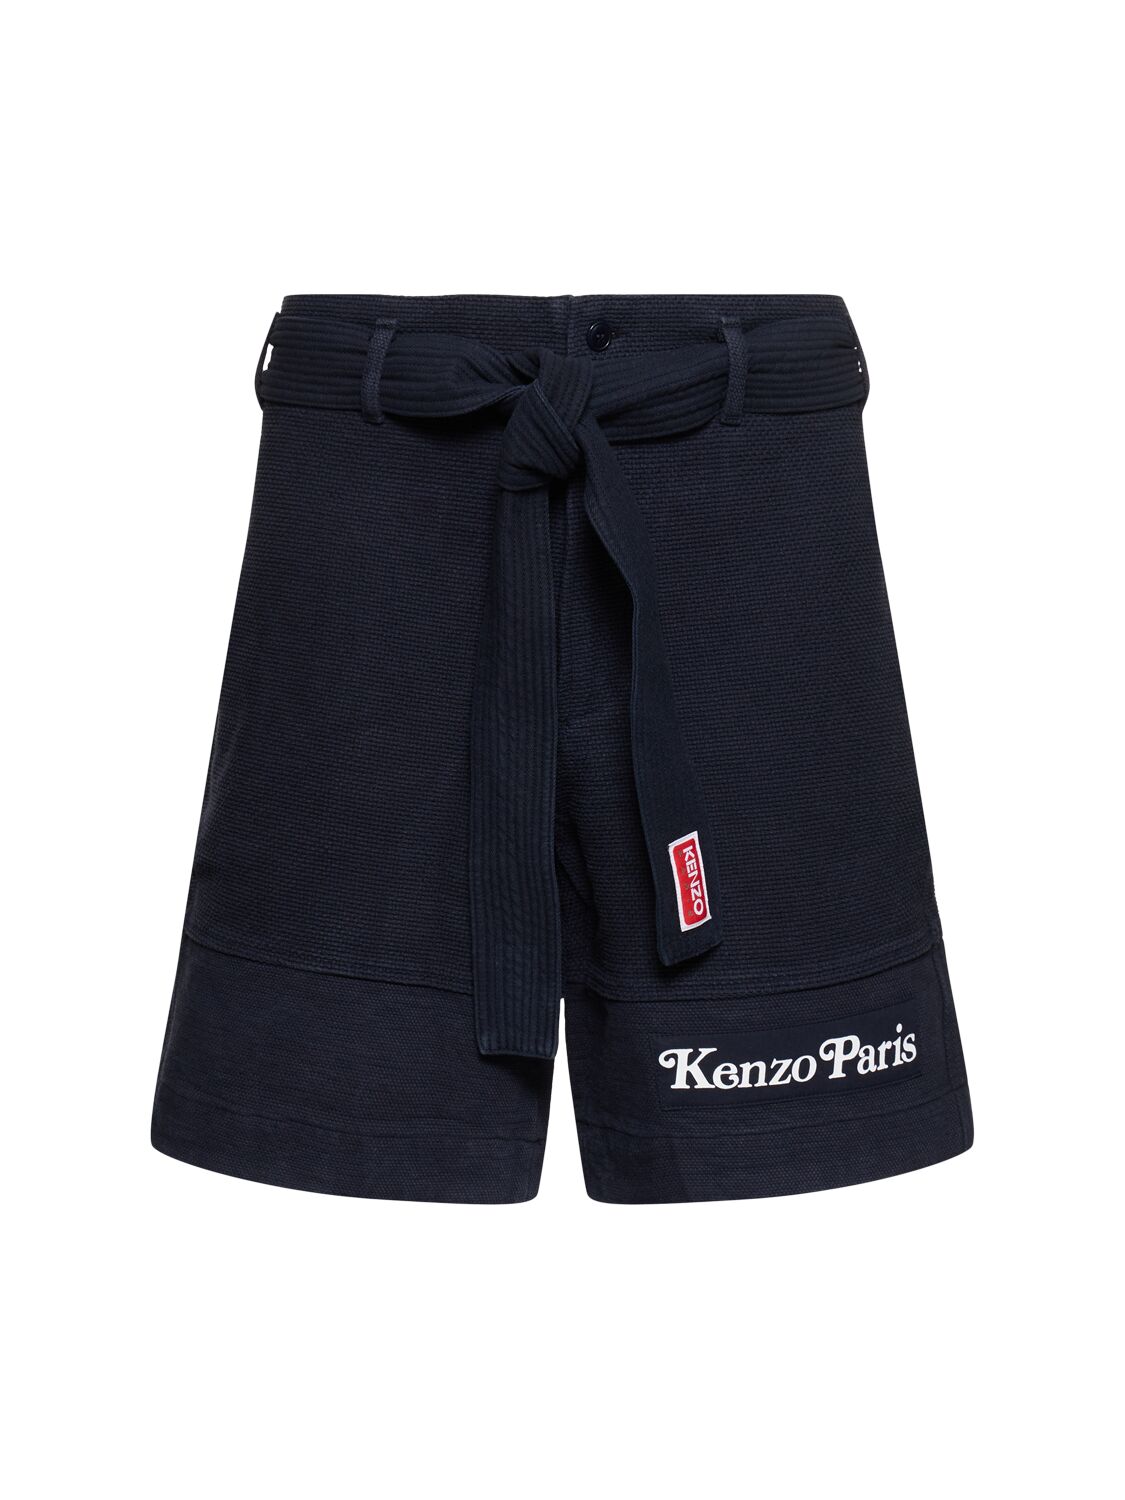 Kenzo By Verdy Woven Cotton Judo Shorts